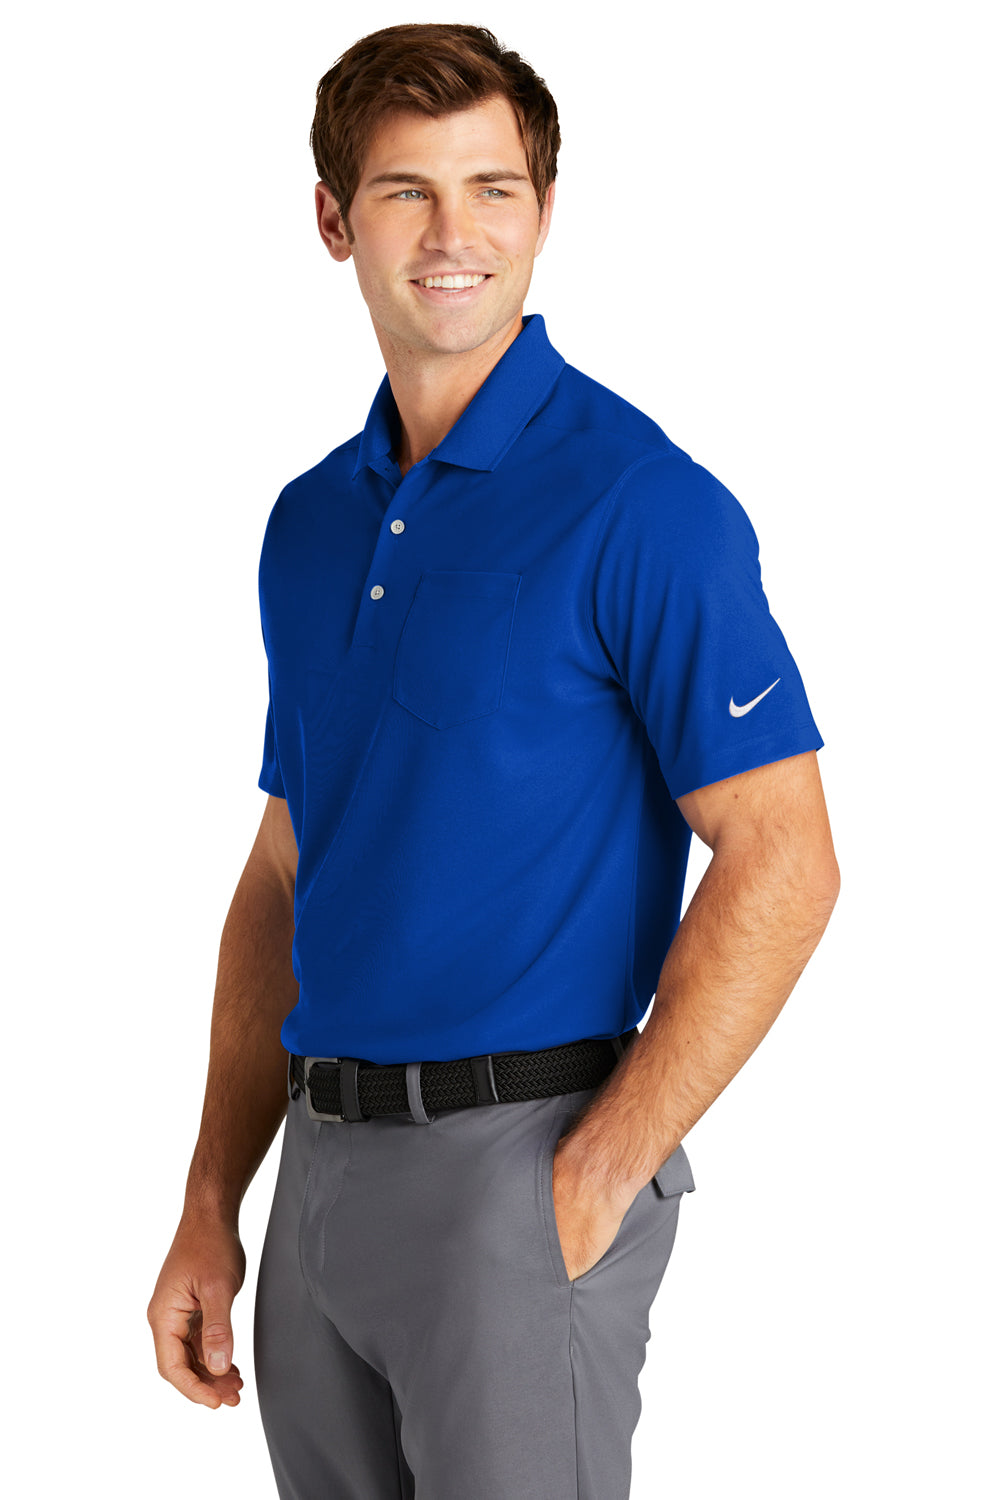 Nike NKDC2103 Mens Dri-Fit Moisture Wicking Micro Pique 2.0 Short Sleeve Polo Shirt w/ Pocket Game Royal Blue Model 3Q